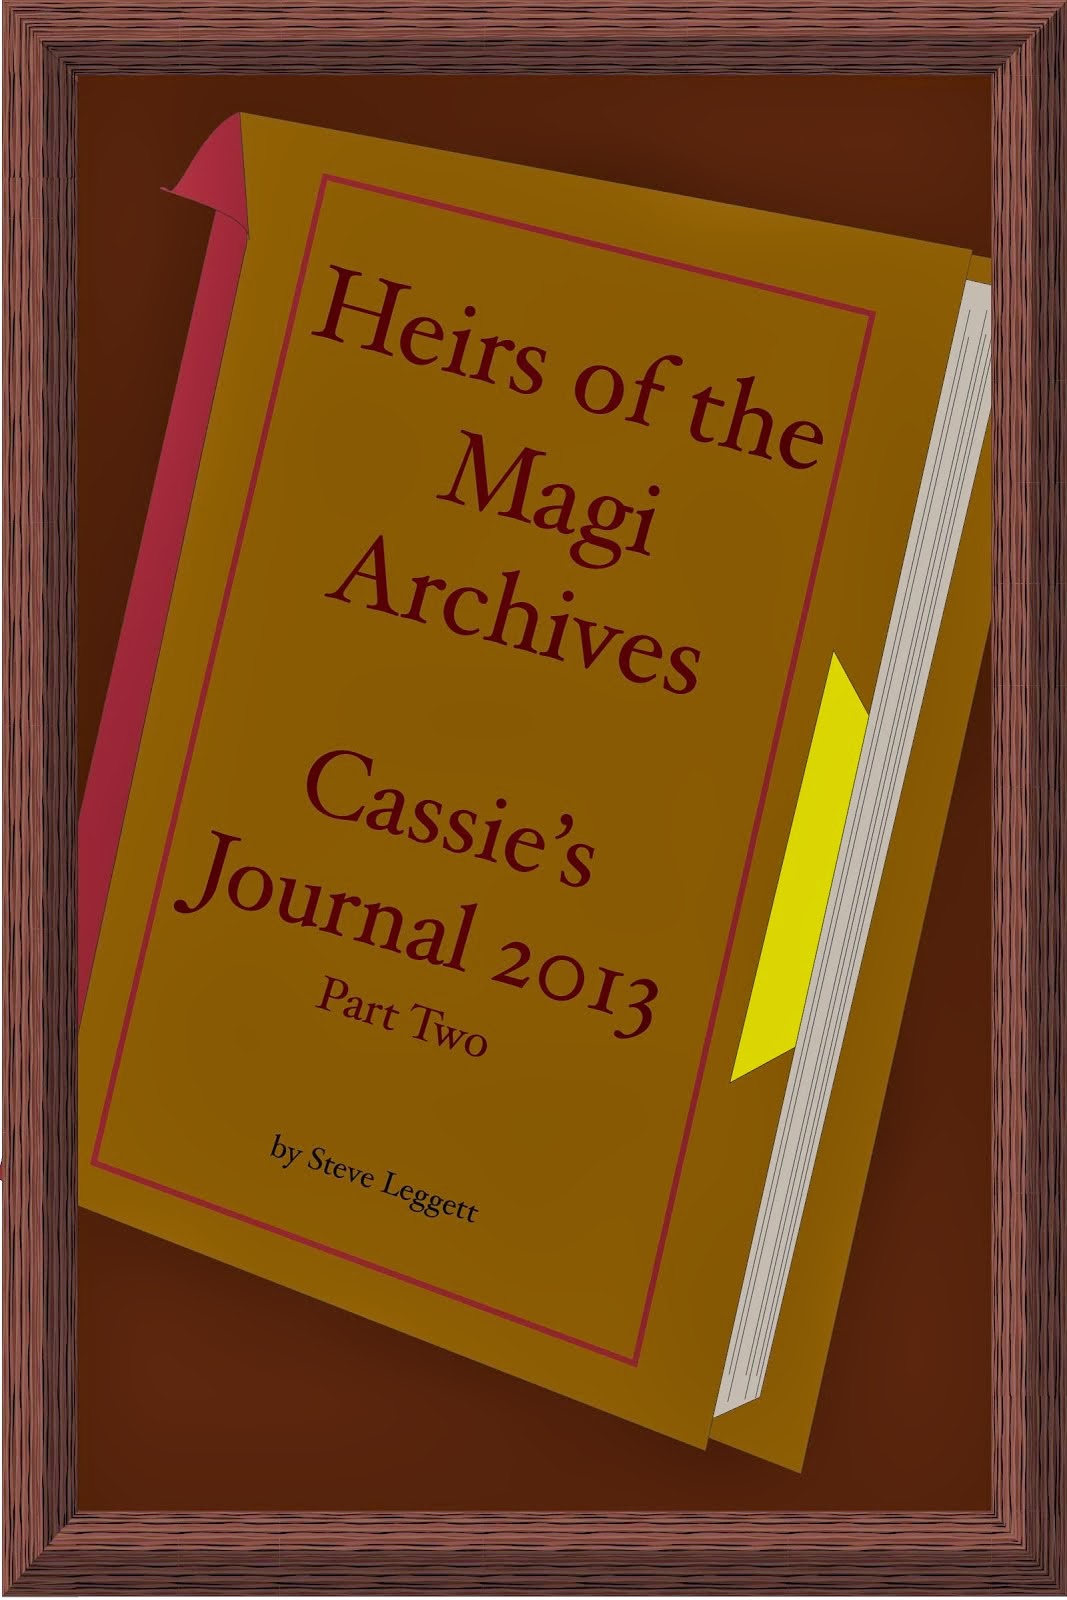 Cassie's Journal 2013 - Part Two